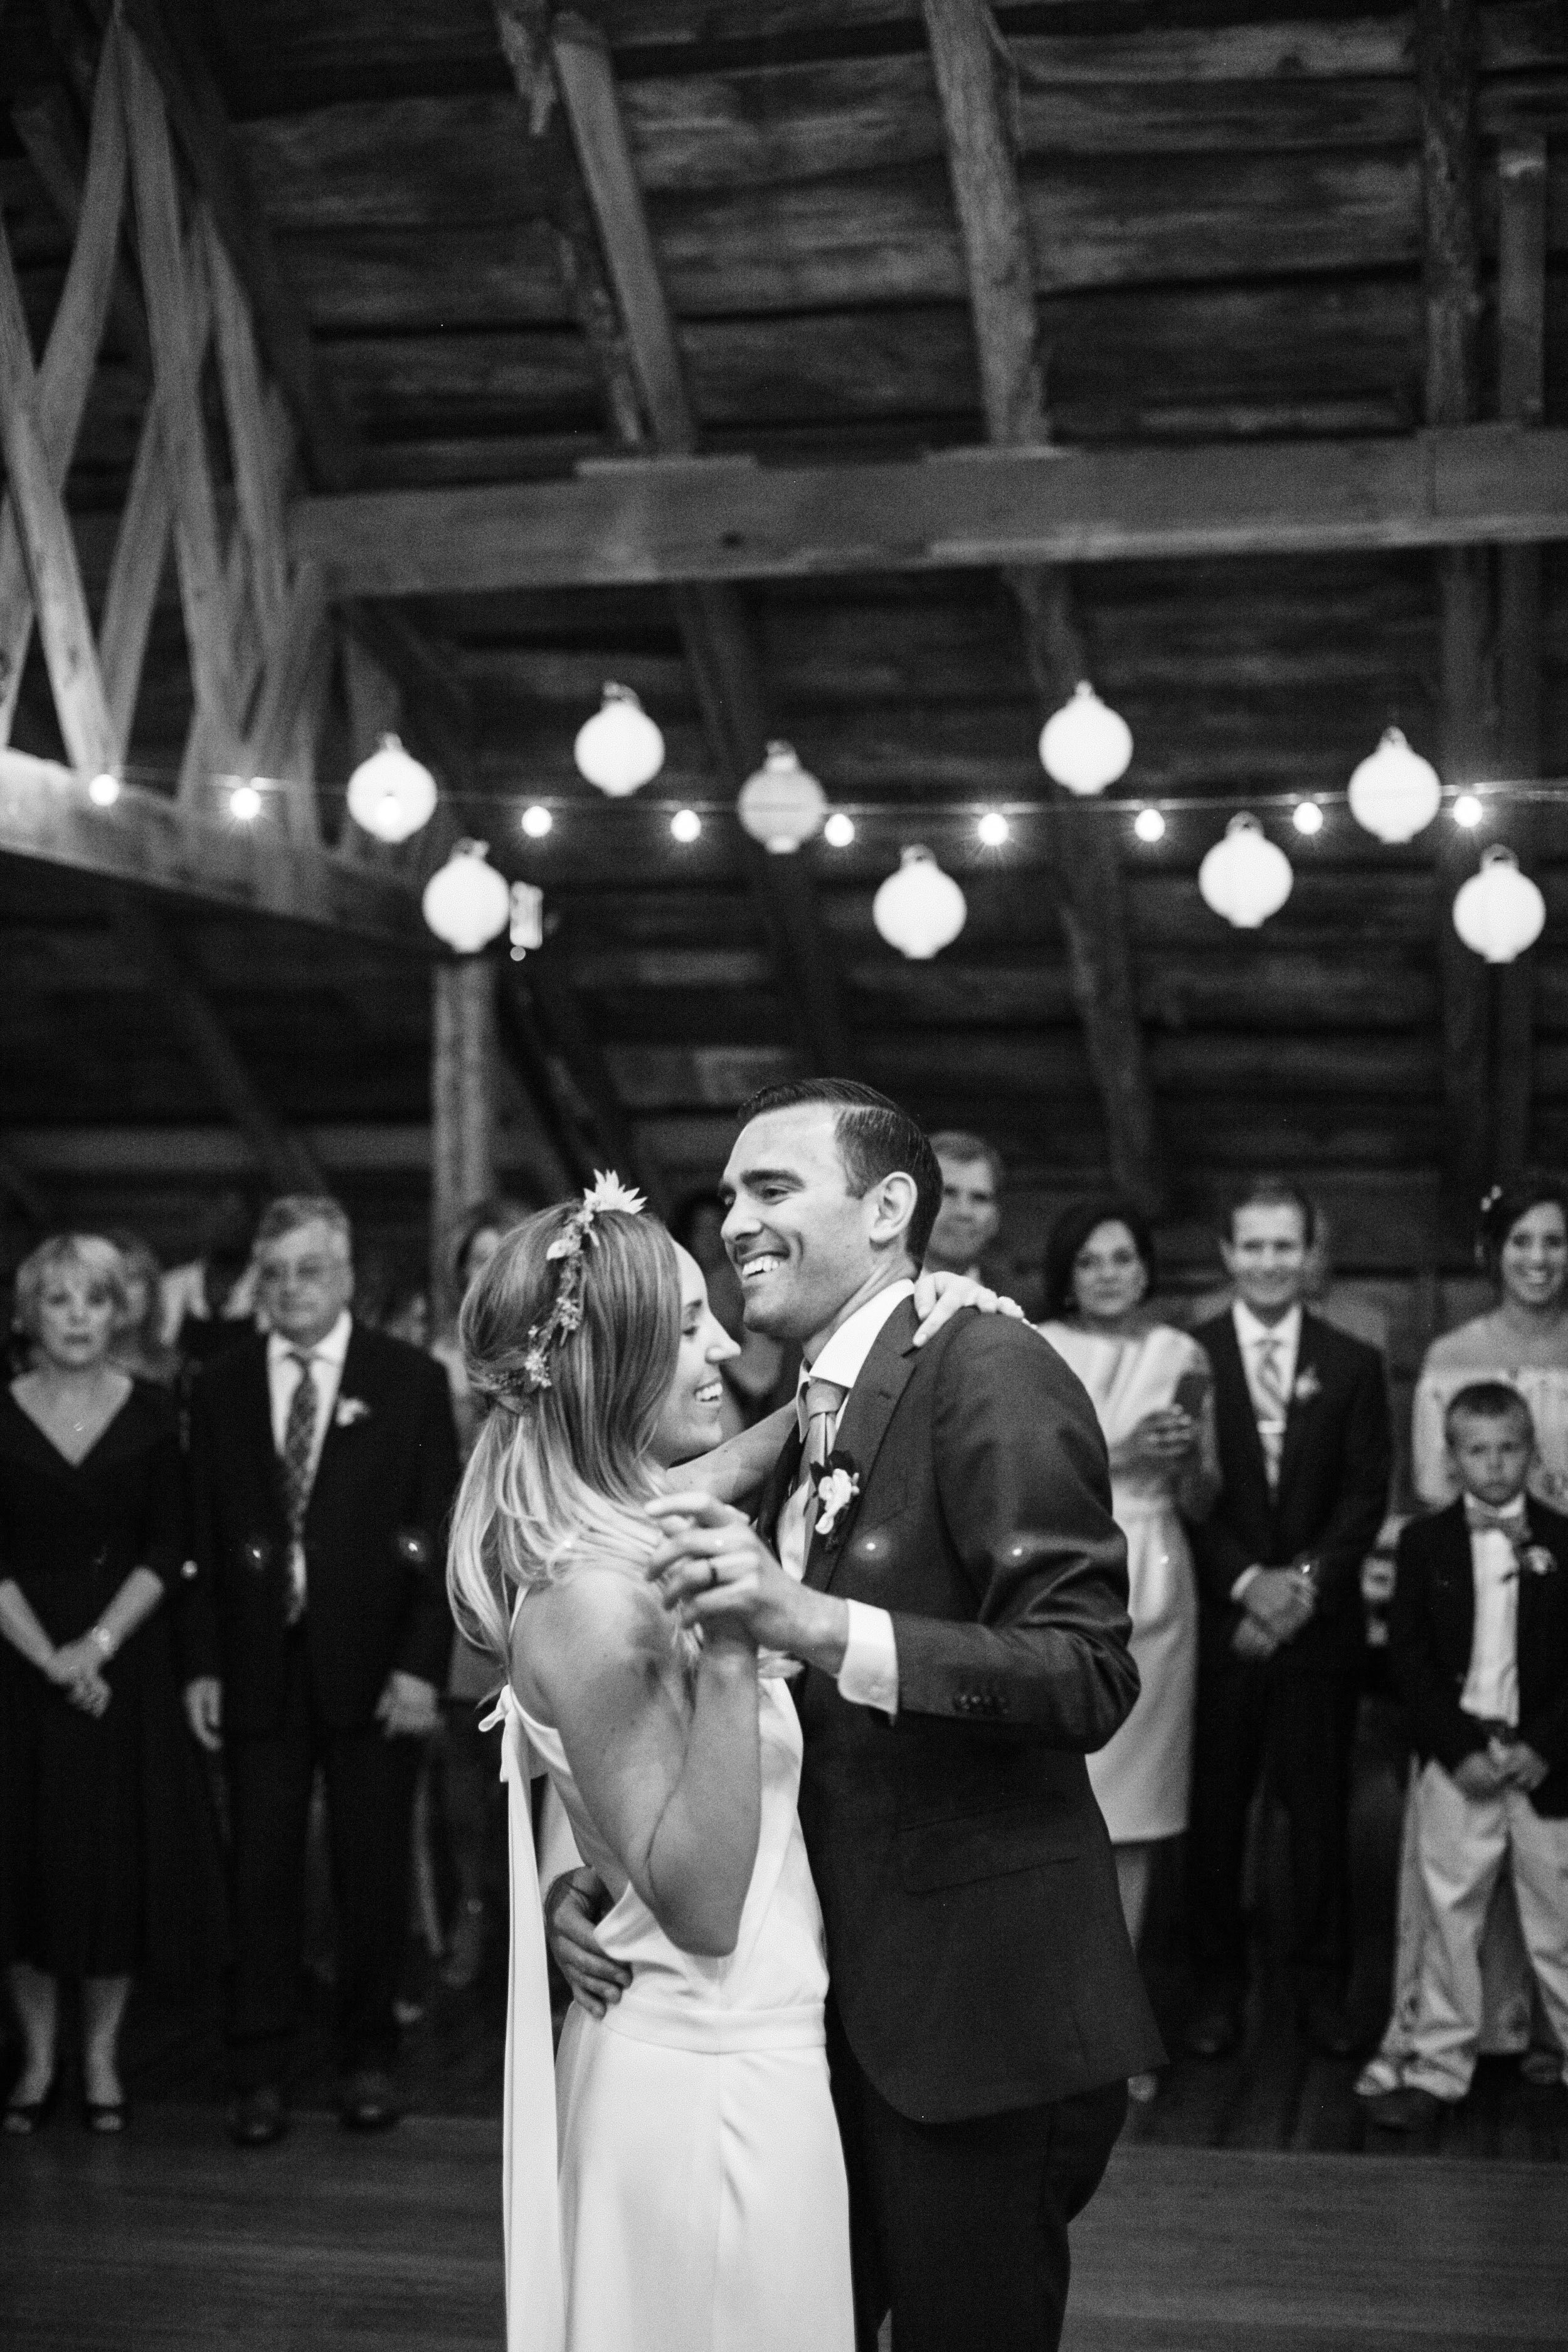 Courtney + Matt Blenheim Hill Farm Catskills NY Wedding Veronica Lola Photography 2017-546.jpg